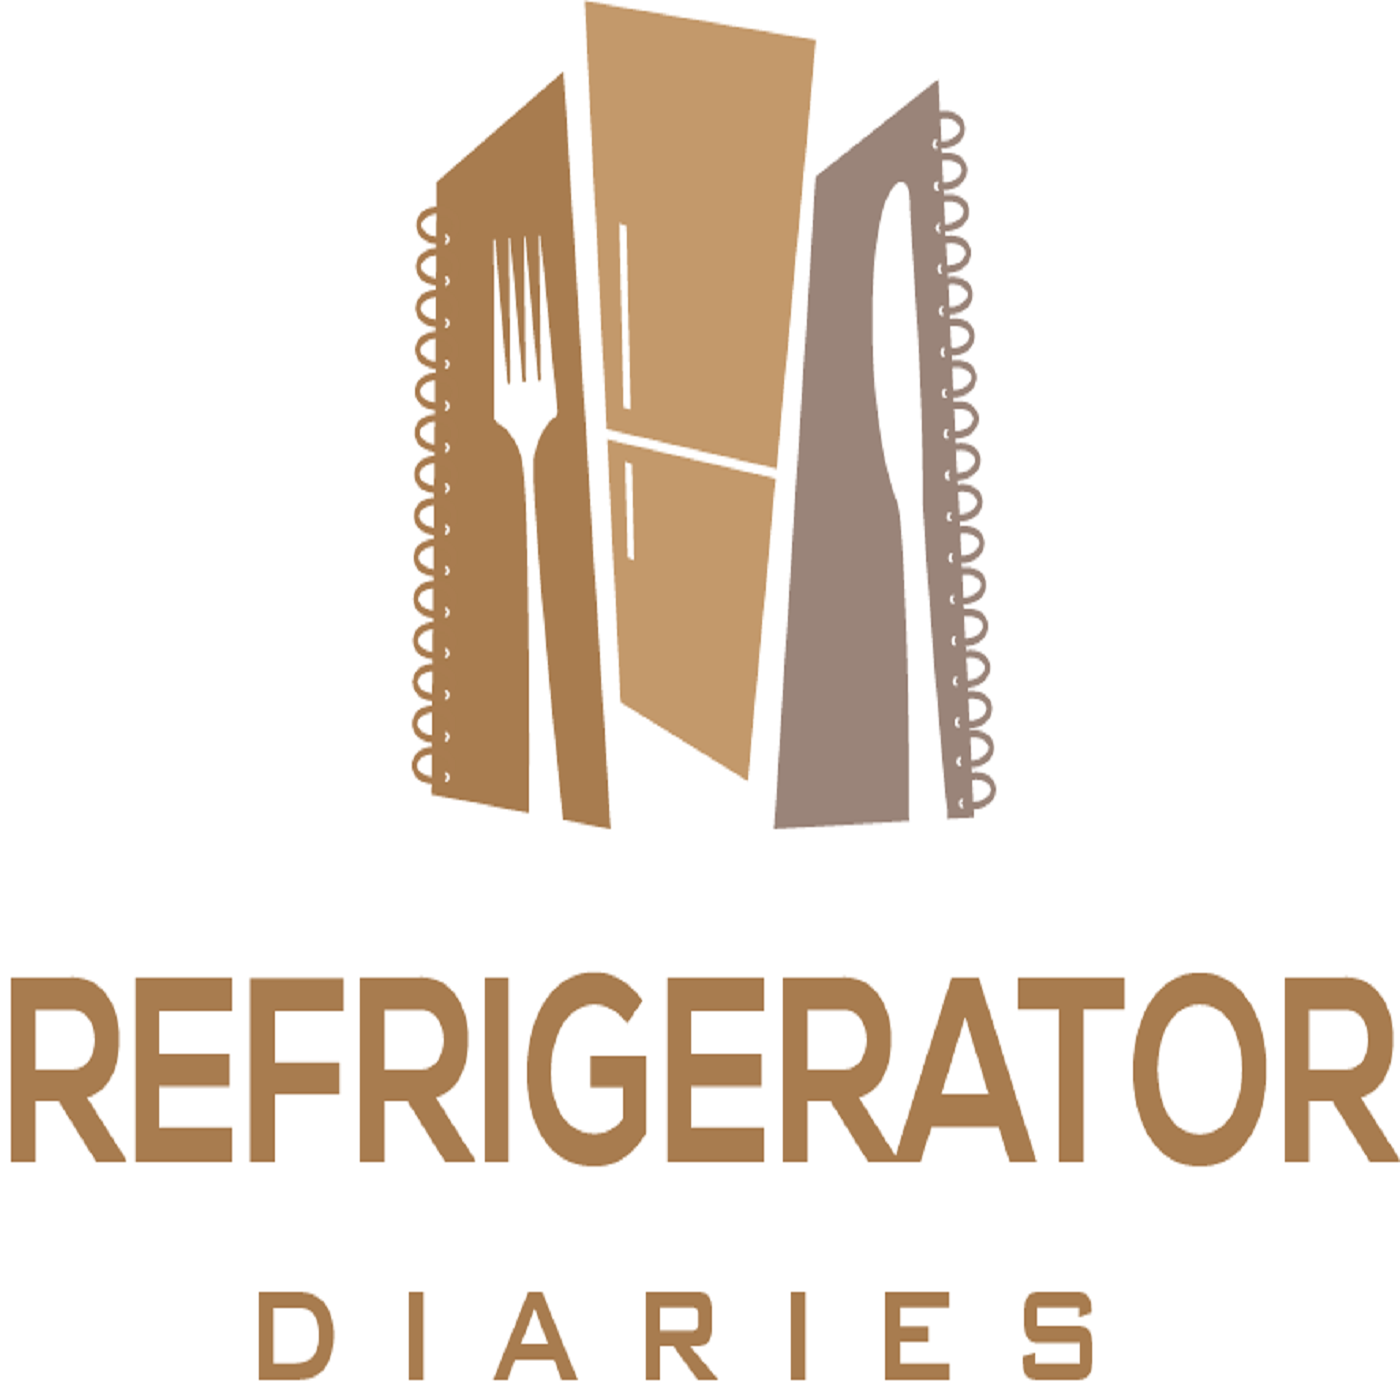 Refrigerator Diaries